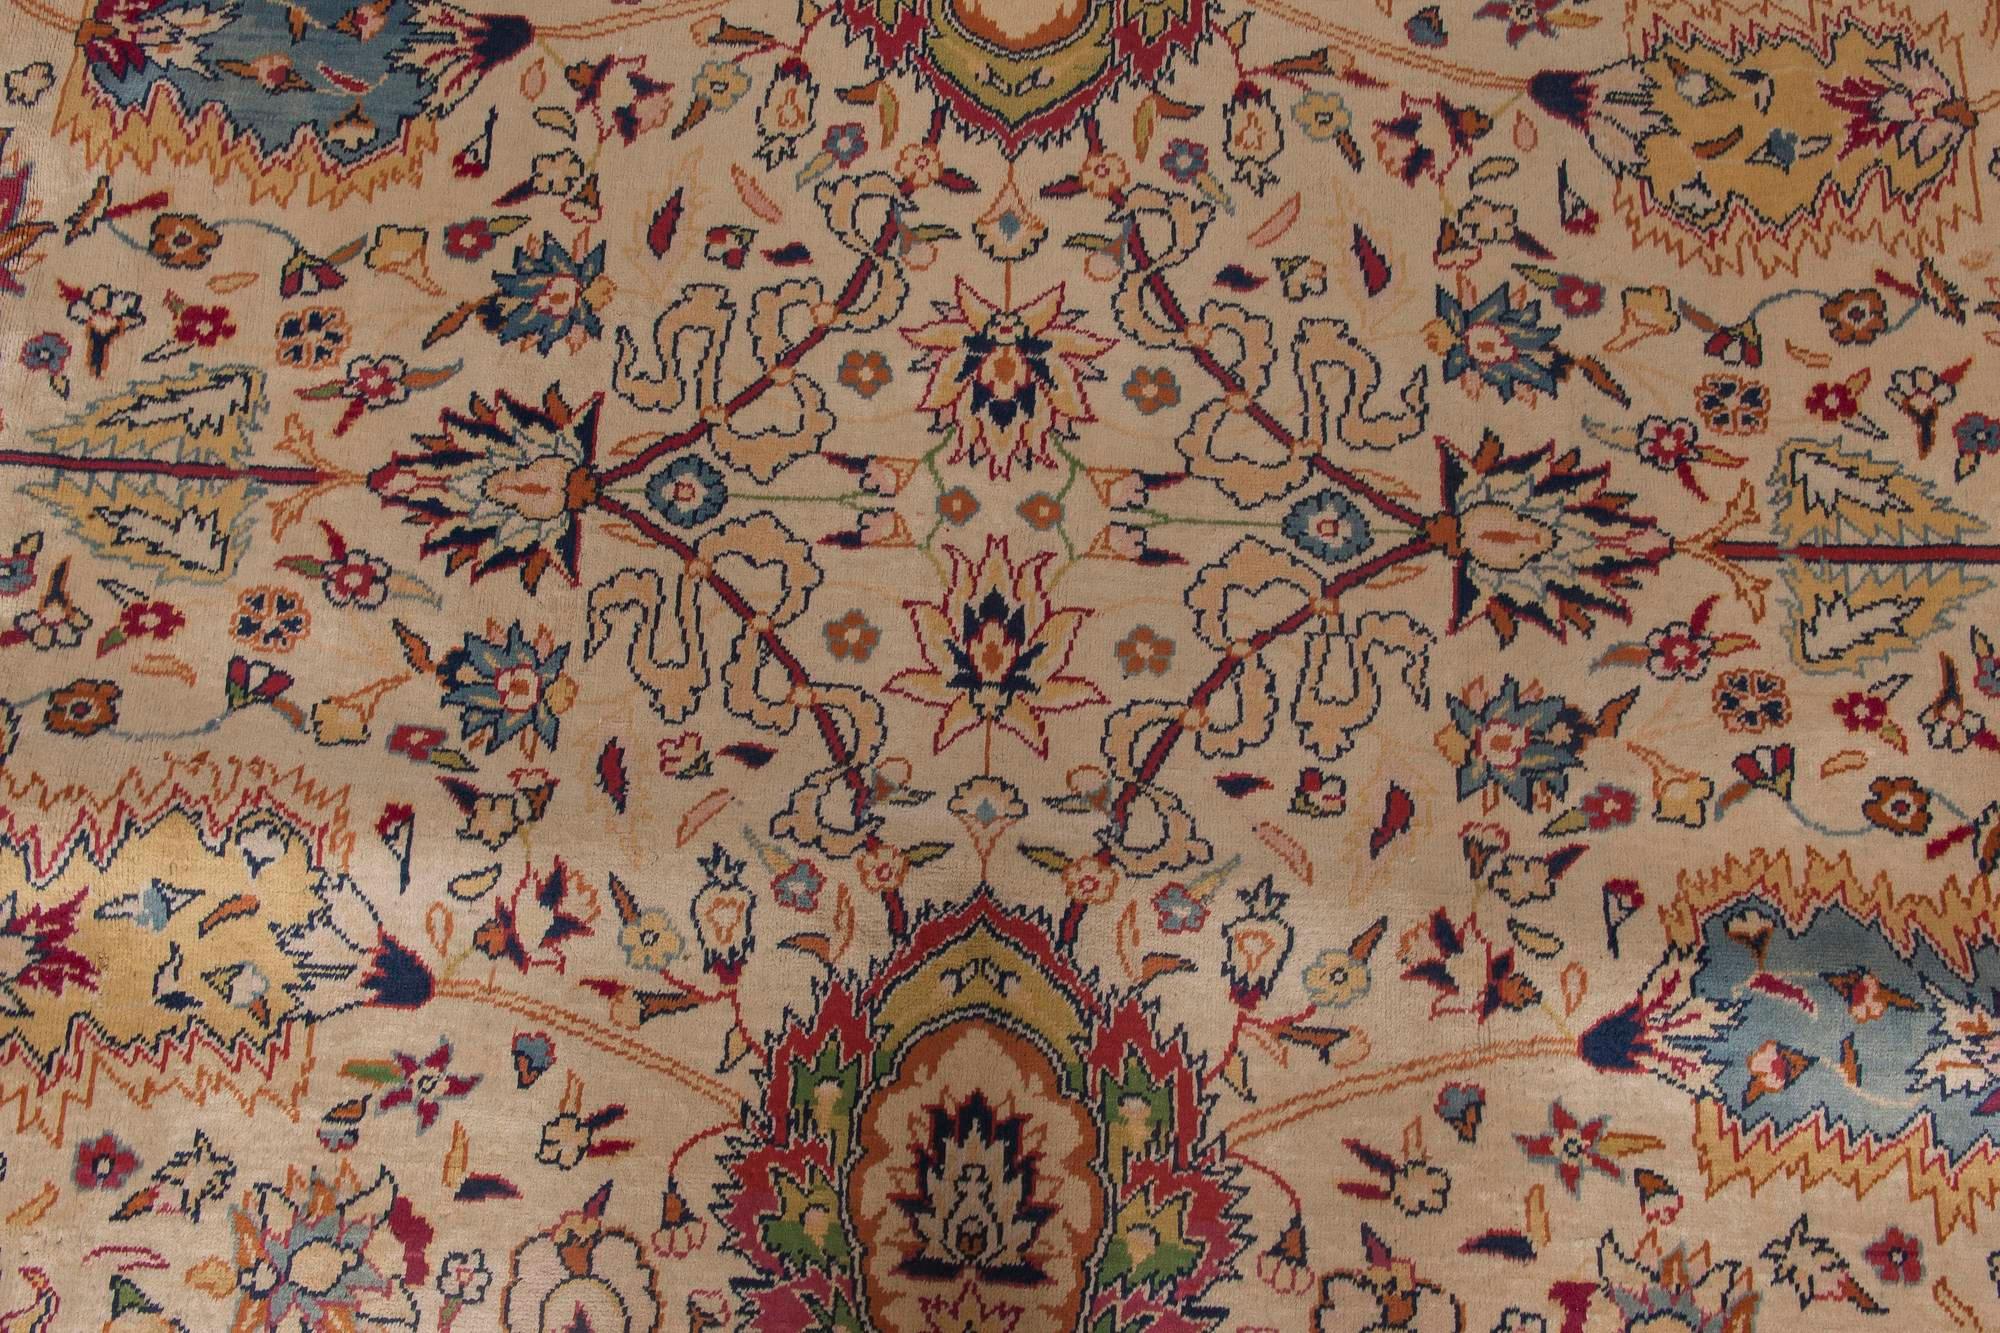 Mid-20th century Turkish Sivas botanic handmade wool carpet
Size: 13'0